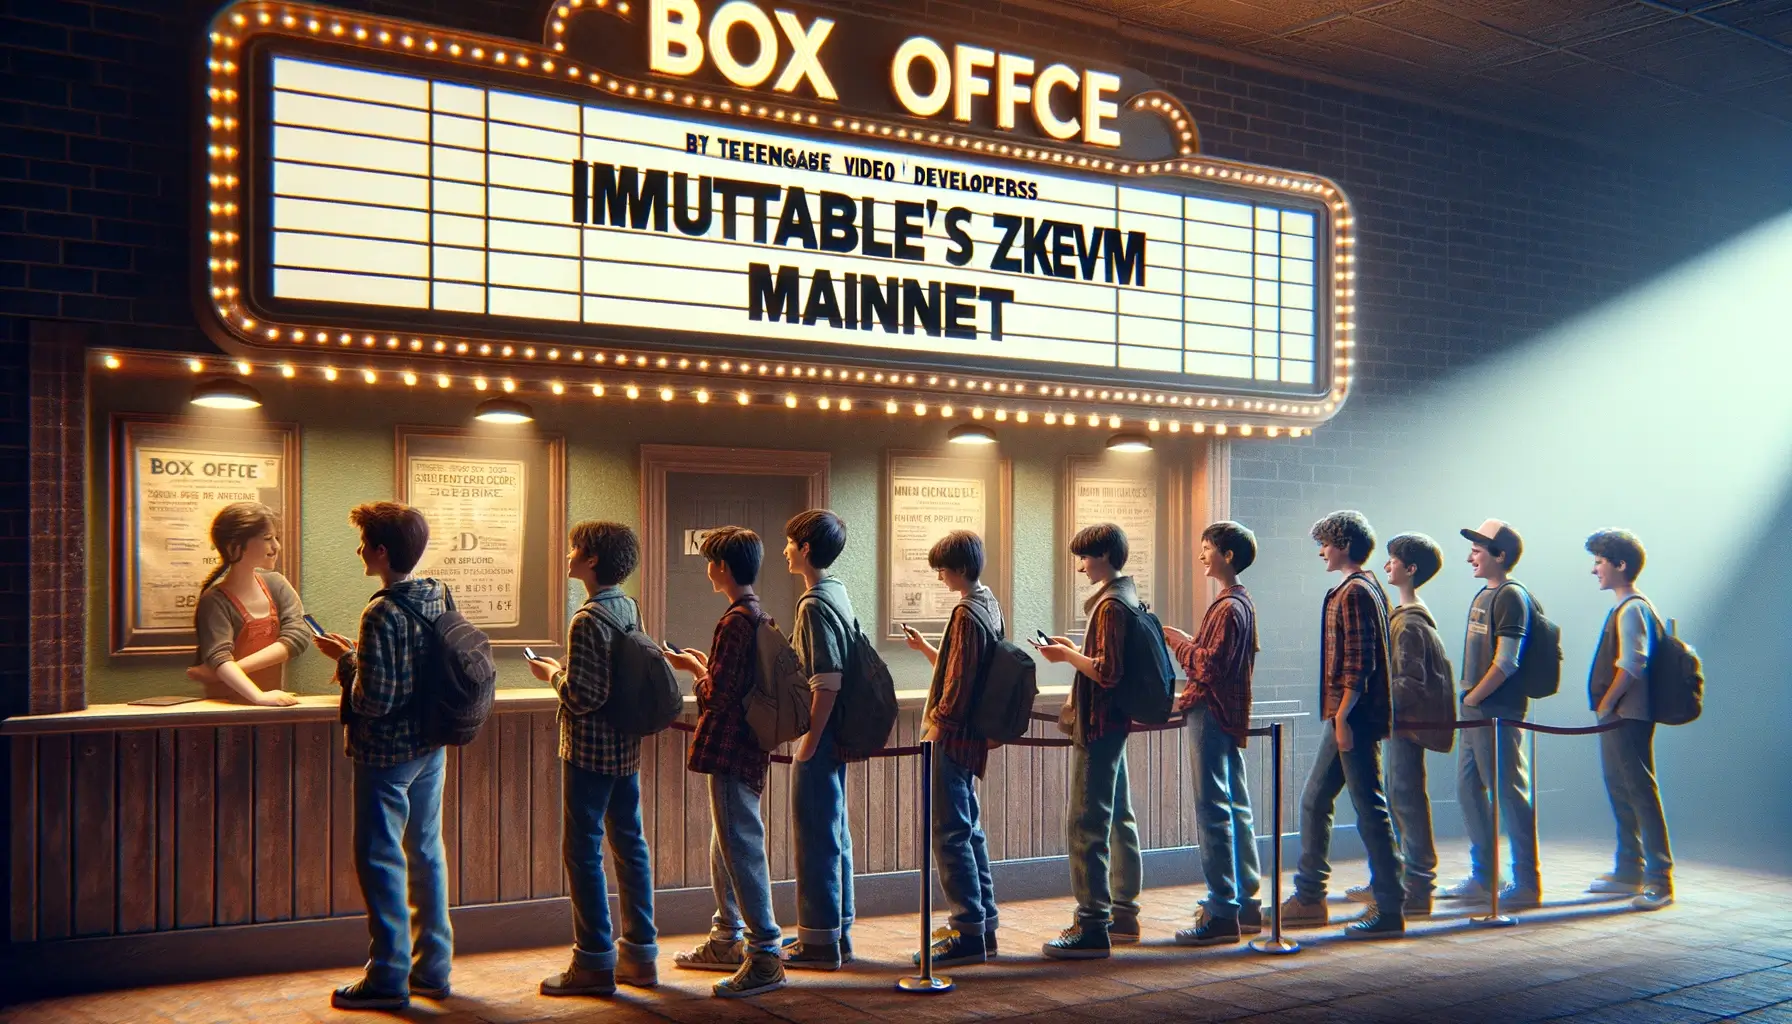 Immutable's zkEVM Mainnet Gains Momentum as Games Make the Move